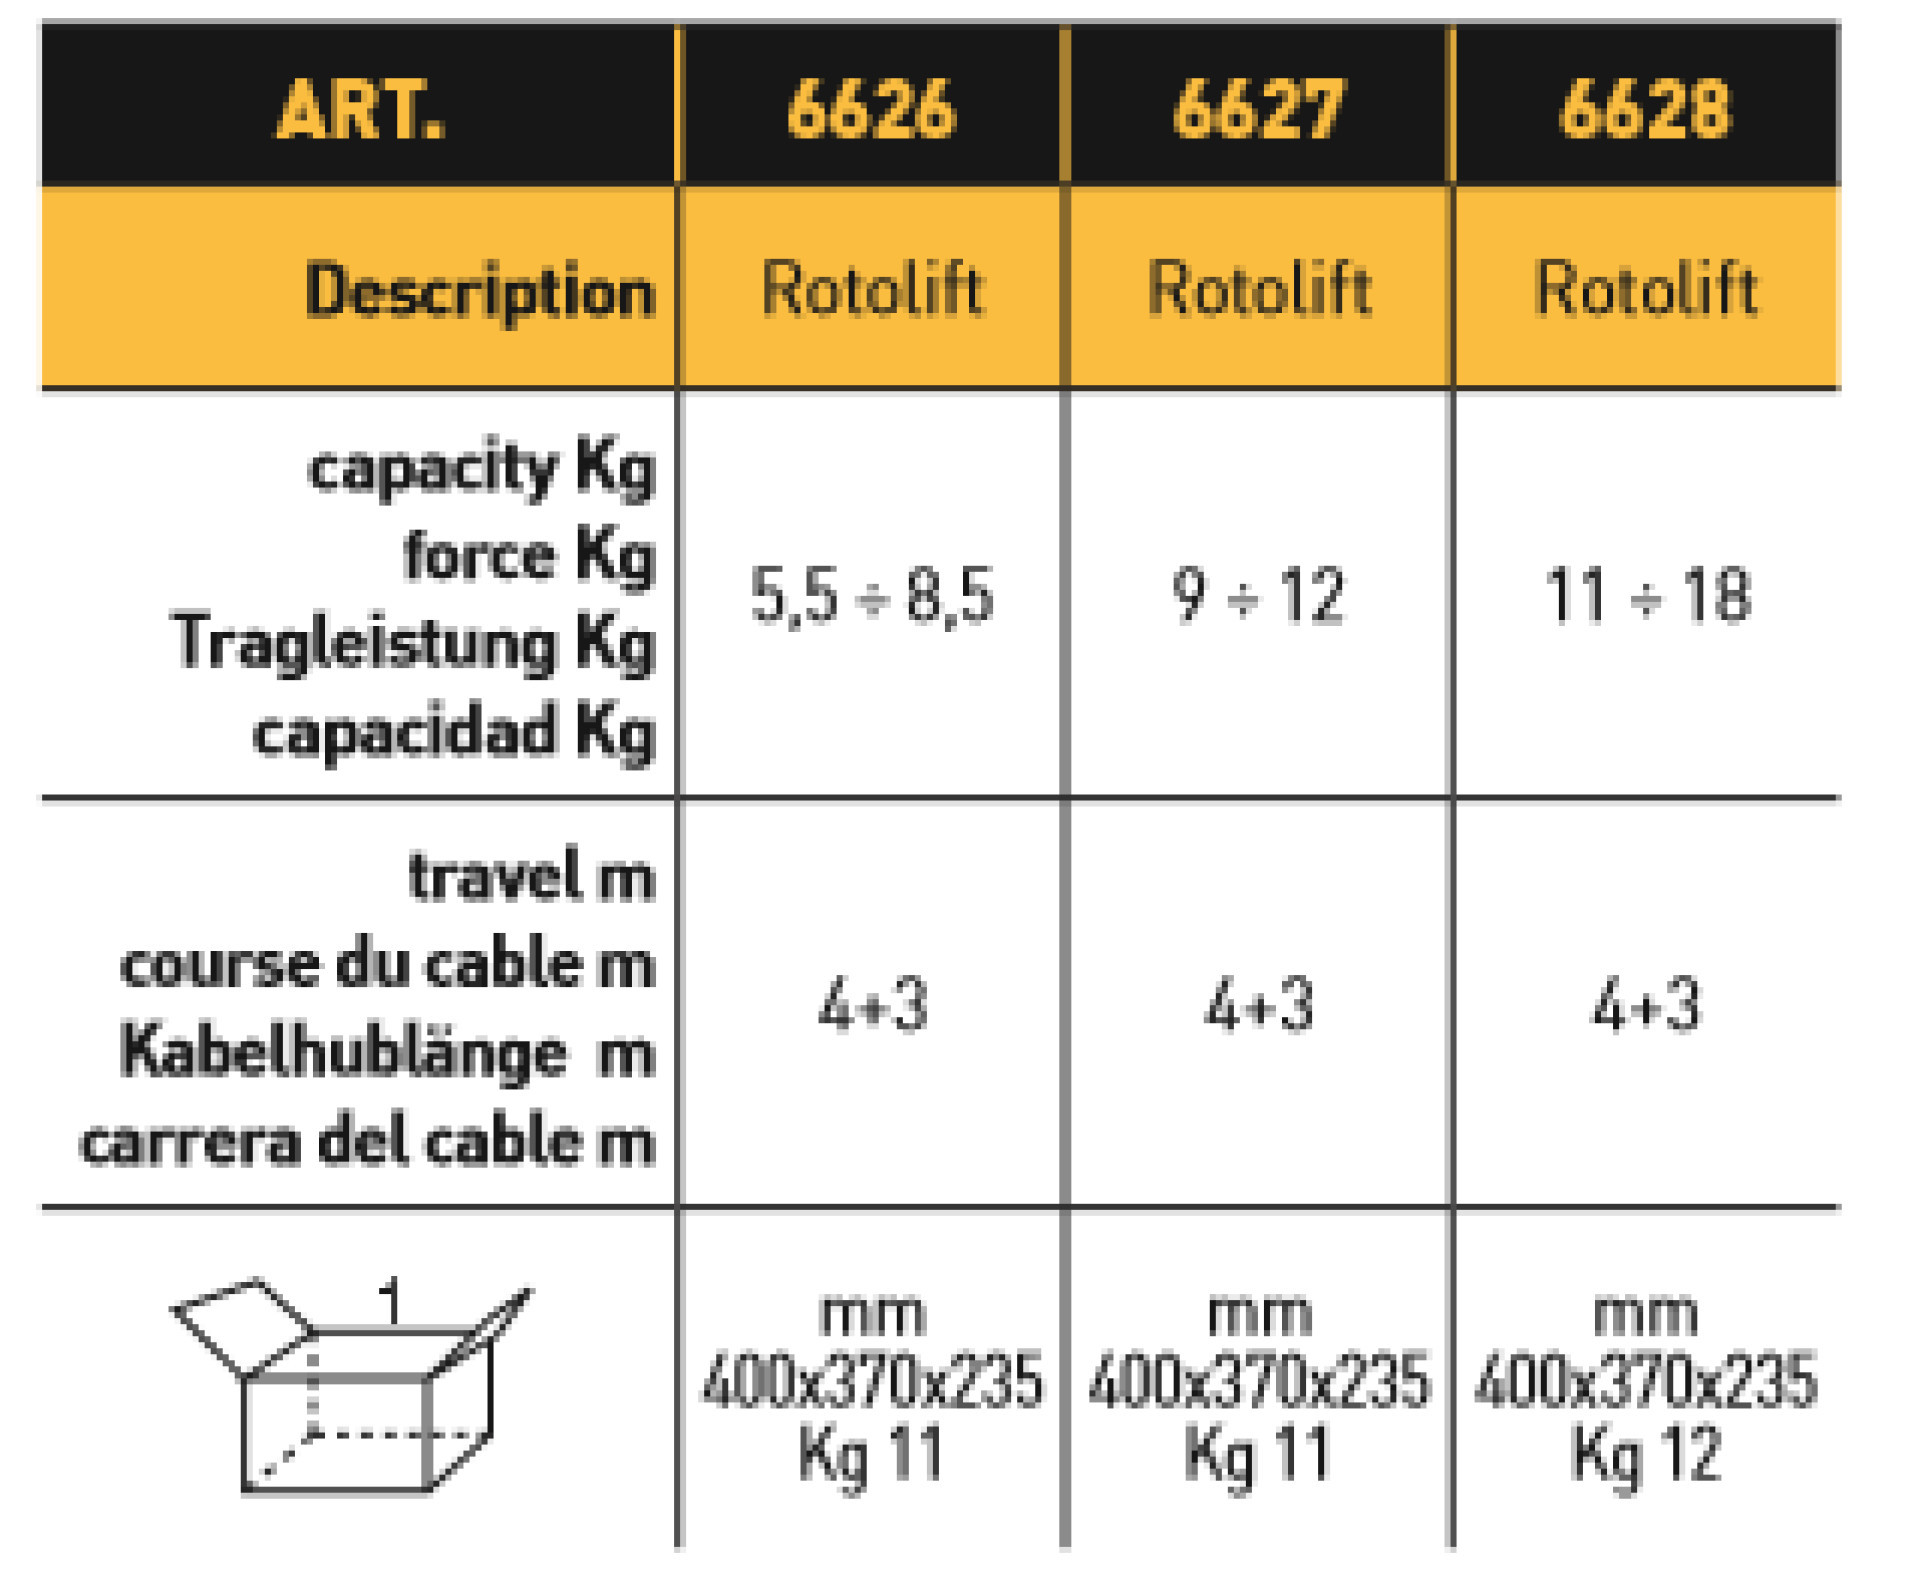 Rotolift 5,5 - 8,5 Kg 4+3 Mt.